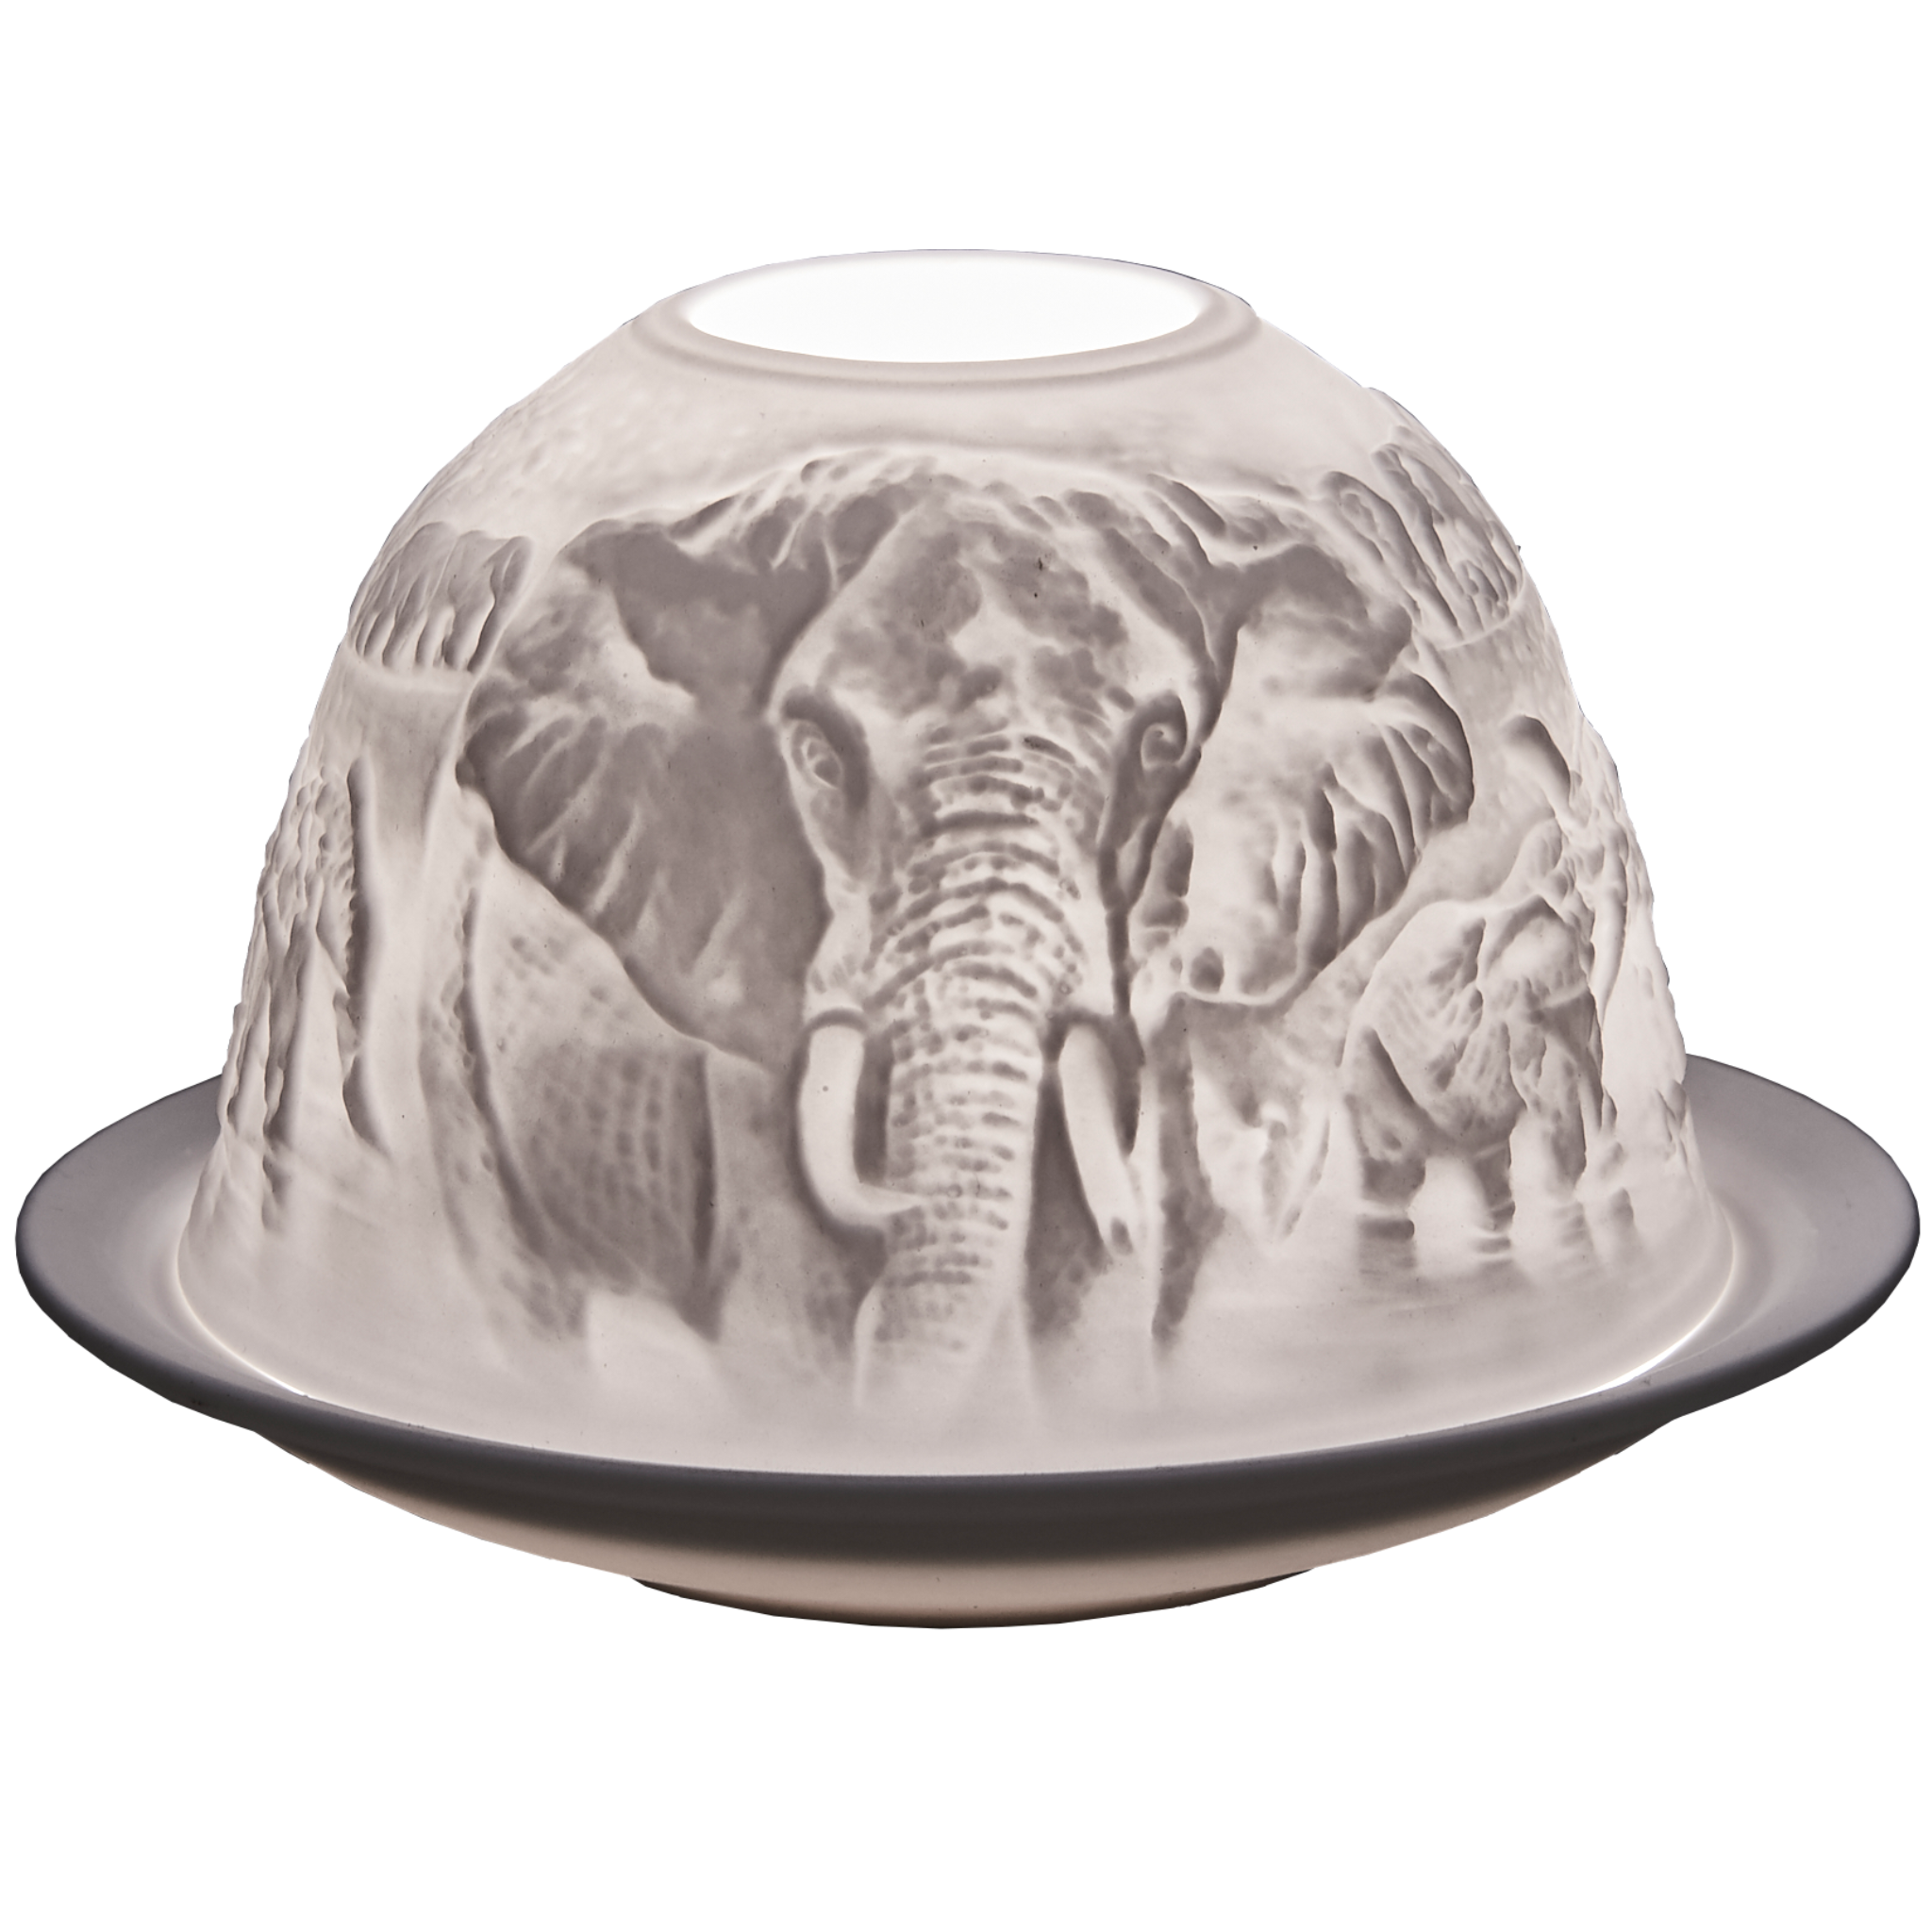 SALE Elephants Domelights Pack of 6